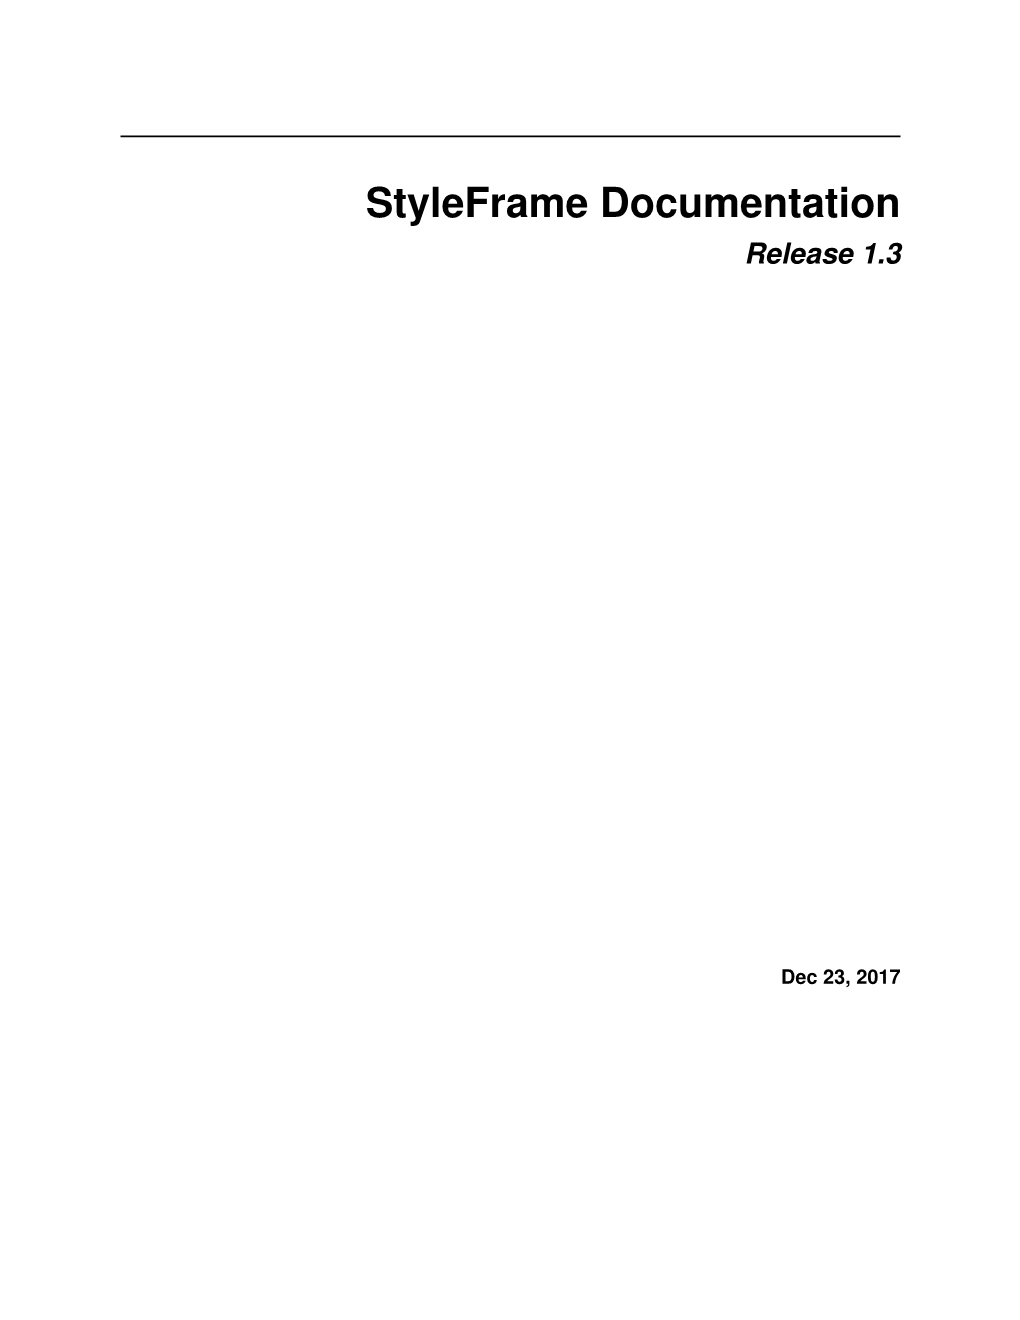 Styleframe Documentation Release 1.3